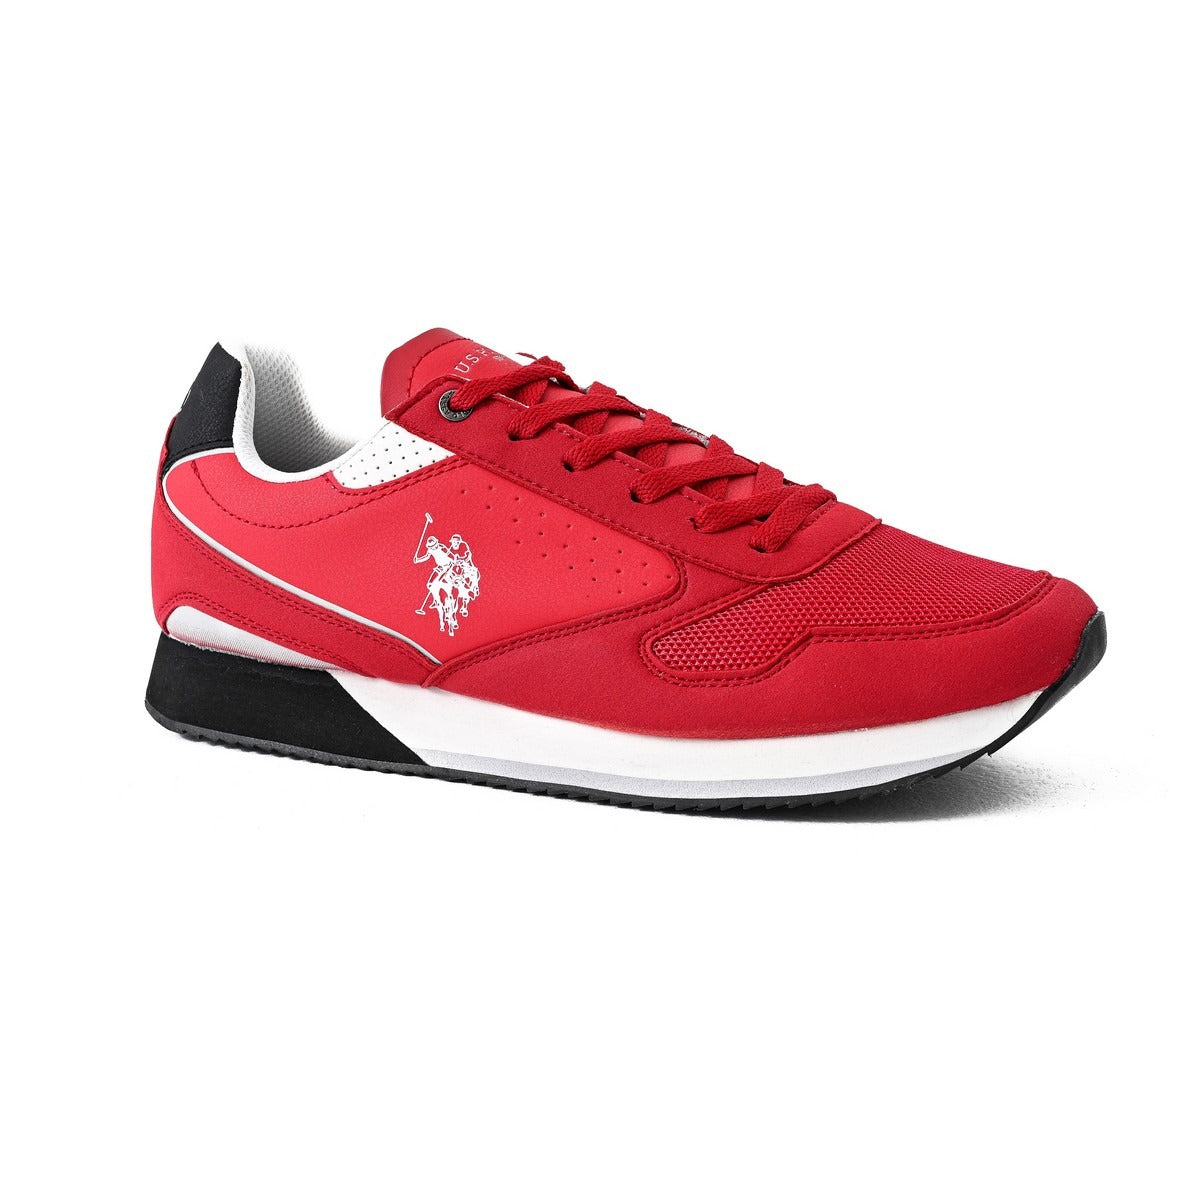 U.S. Polo Assn. Men’s Sneakers Red #P334